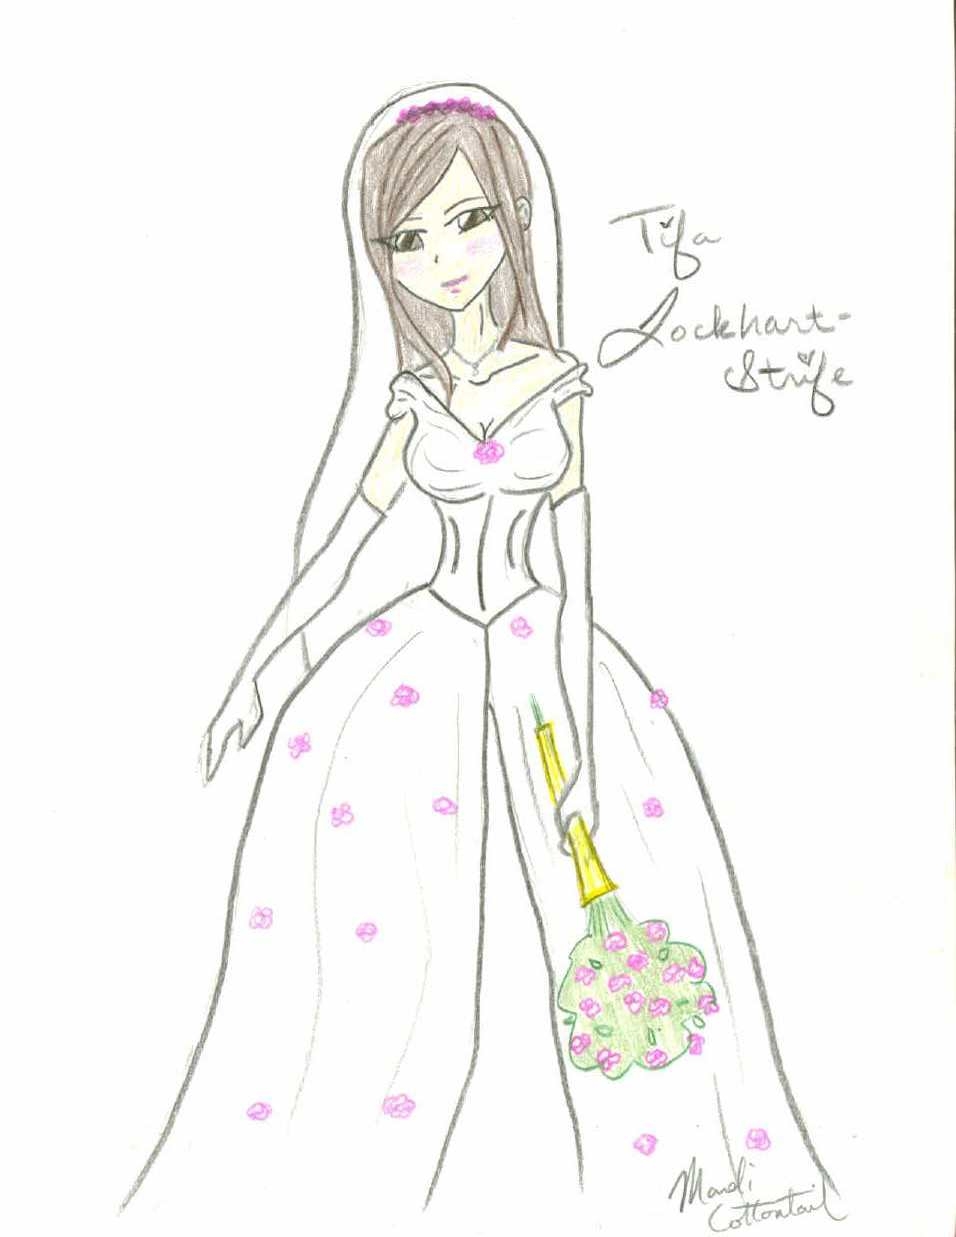 Tifa as a Bride by Mandi_Cottontail